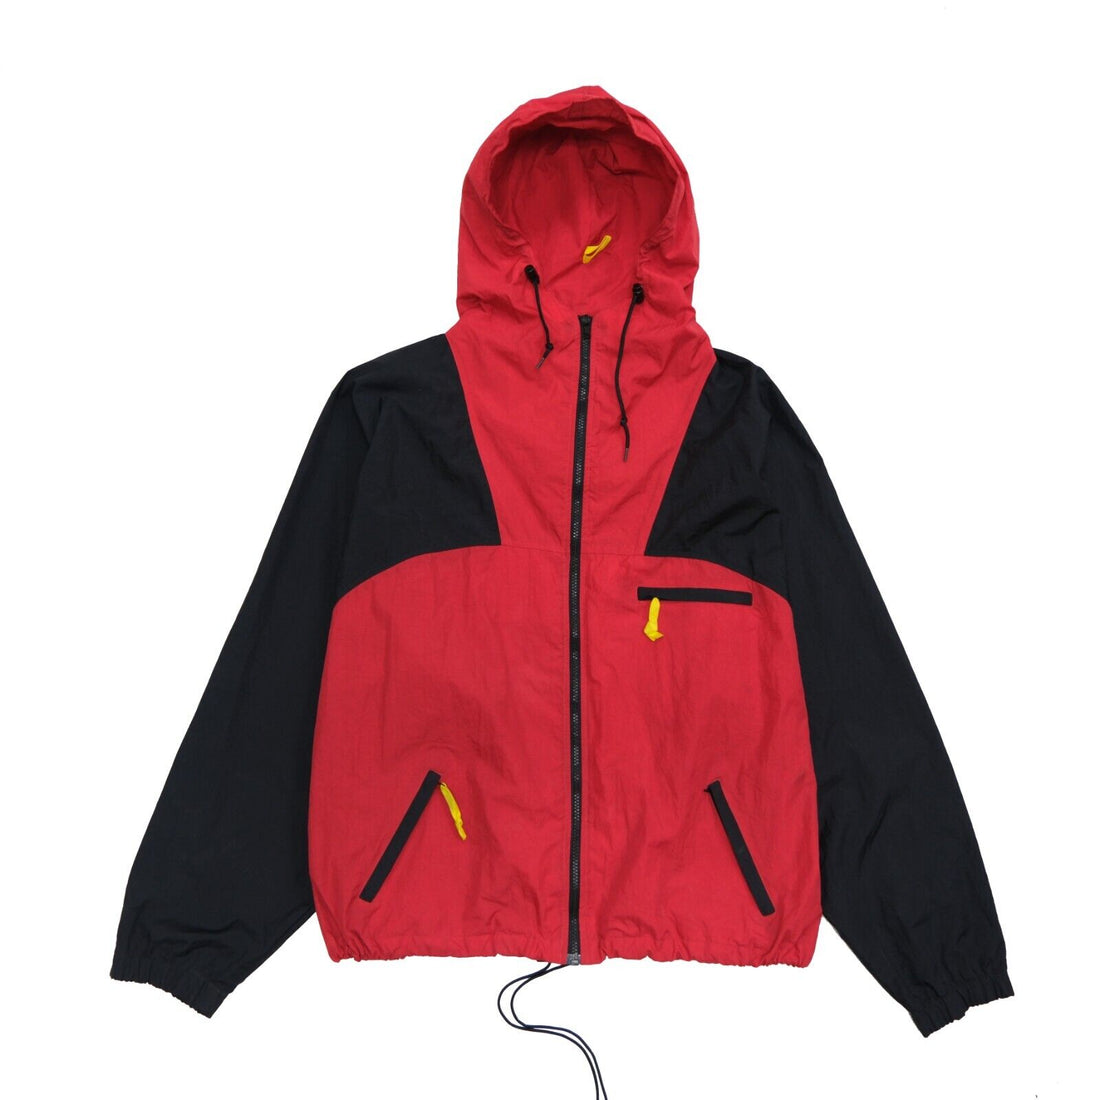 Vintage Marlboro Adventure Team Windbreaker Jacket Size XL Red 90s